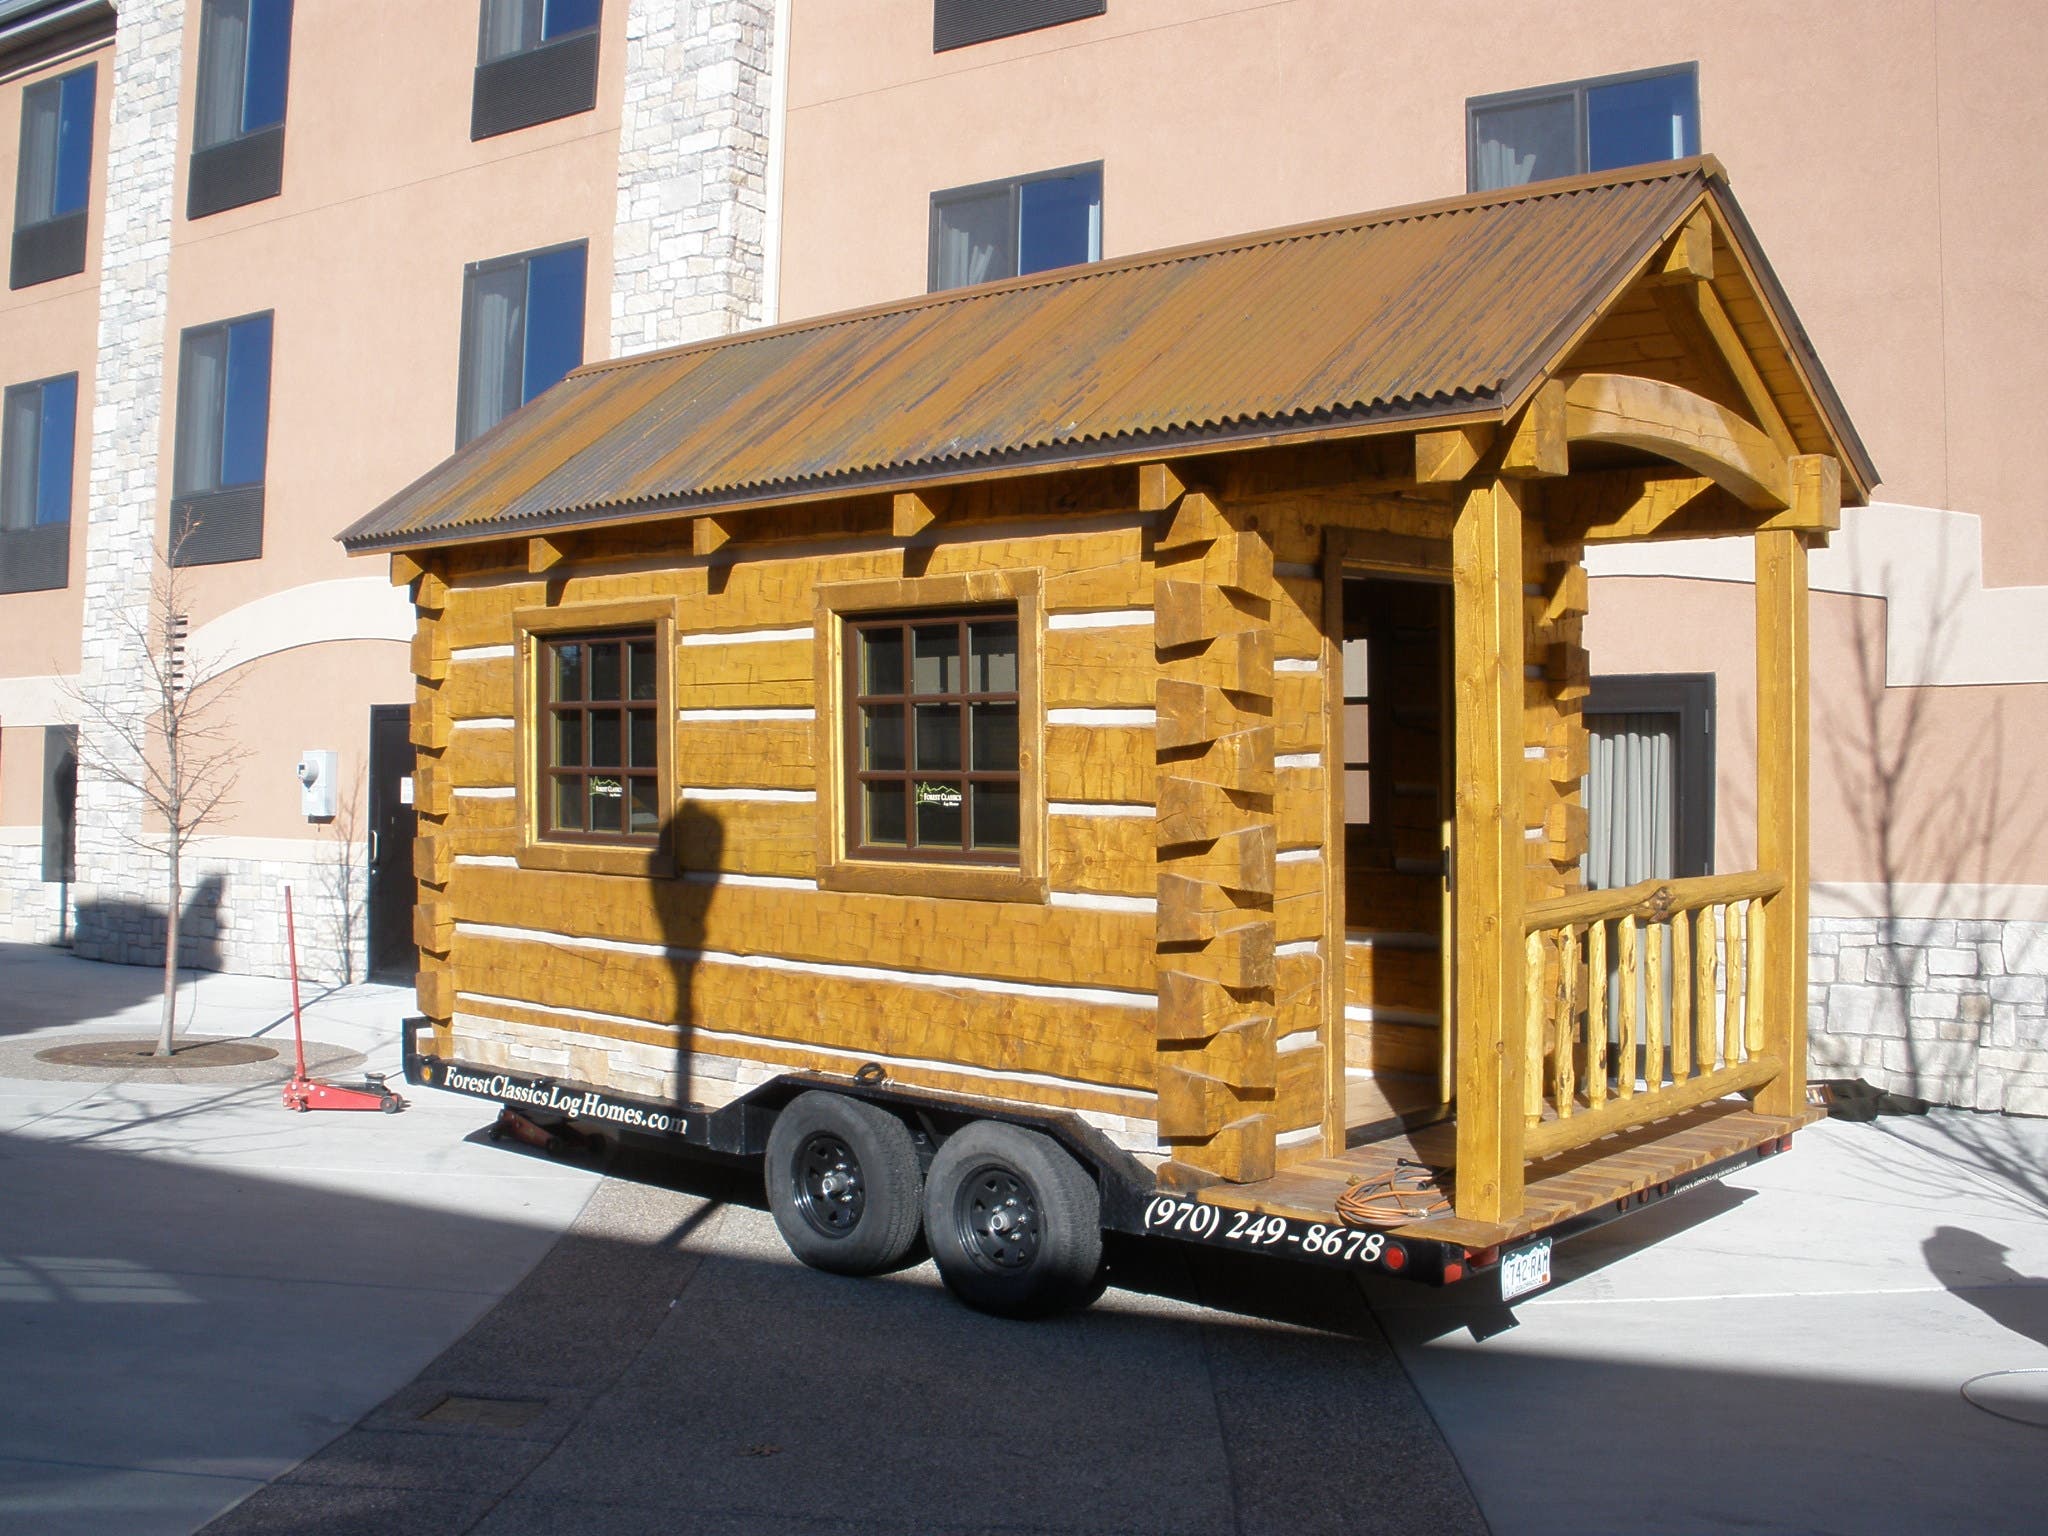 Log Cabin Tiny House On Wheels - Image to u